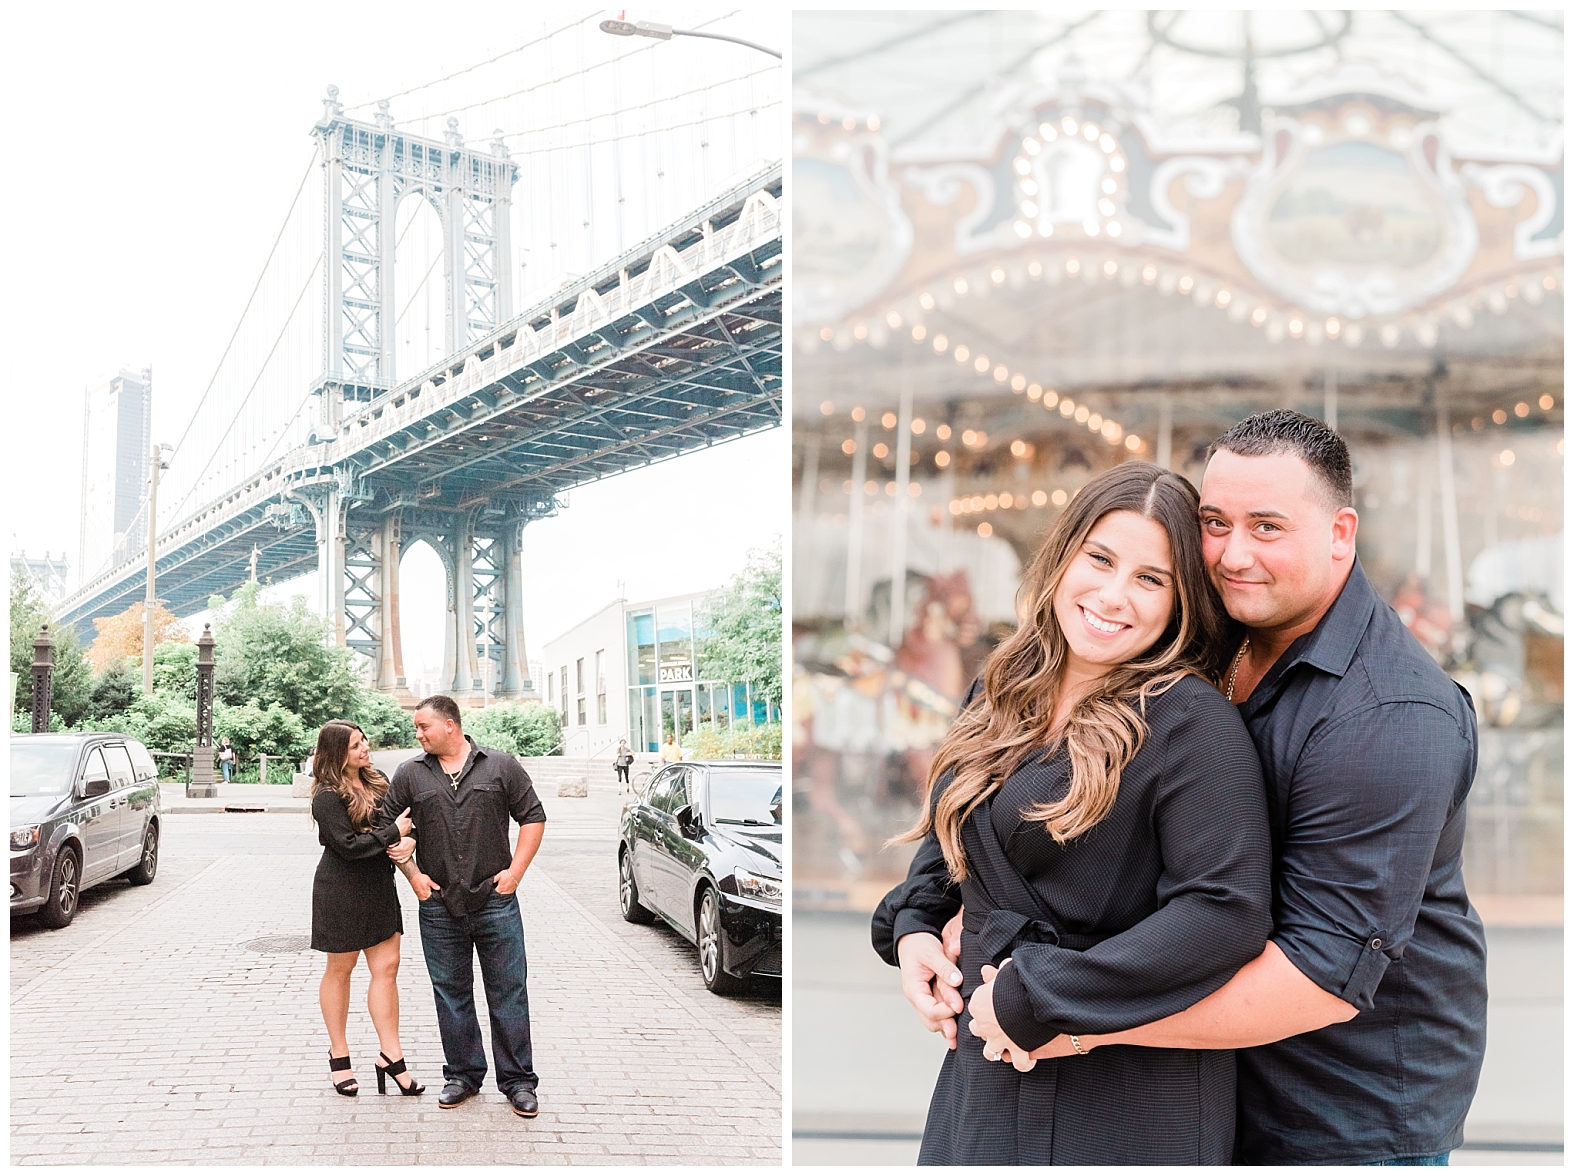 Brooklyn, Engagement Session, Carousel, Jane's Carousel, NYC, DUMBO, City, New York, Manhattan Bridge, Photographer, Photo